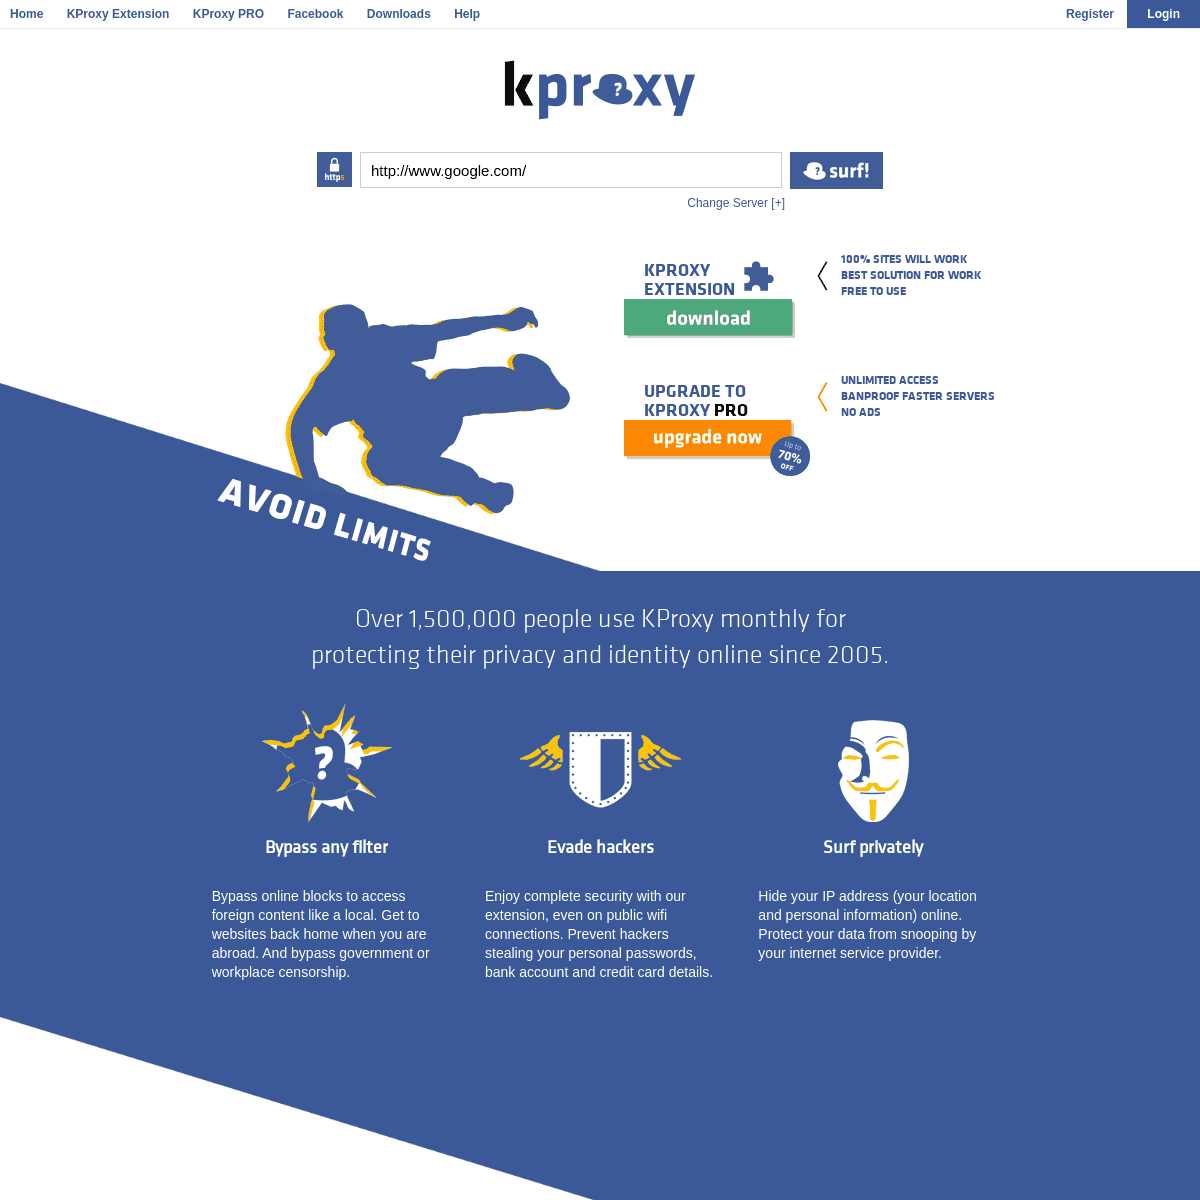 A complete backup of kproxy.com